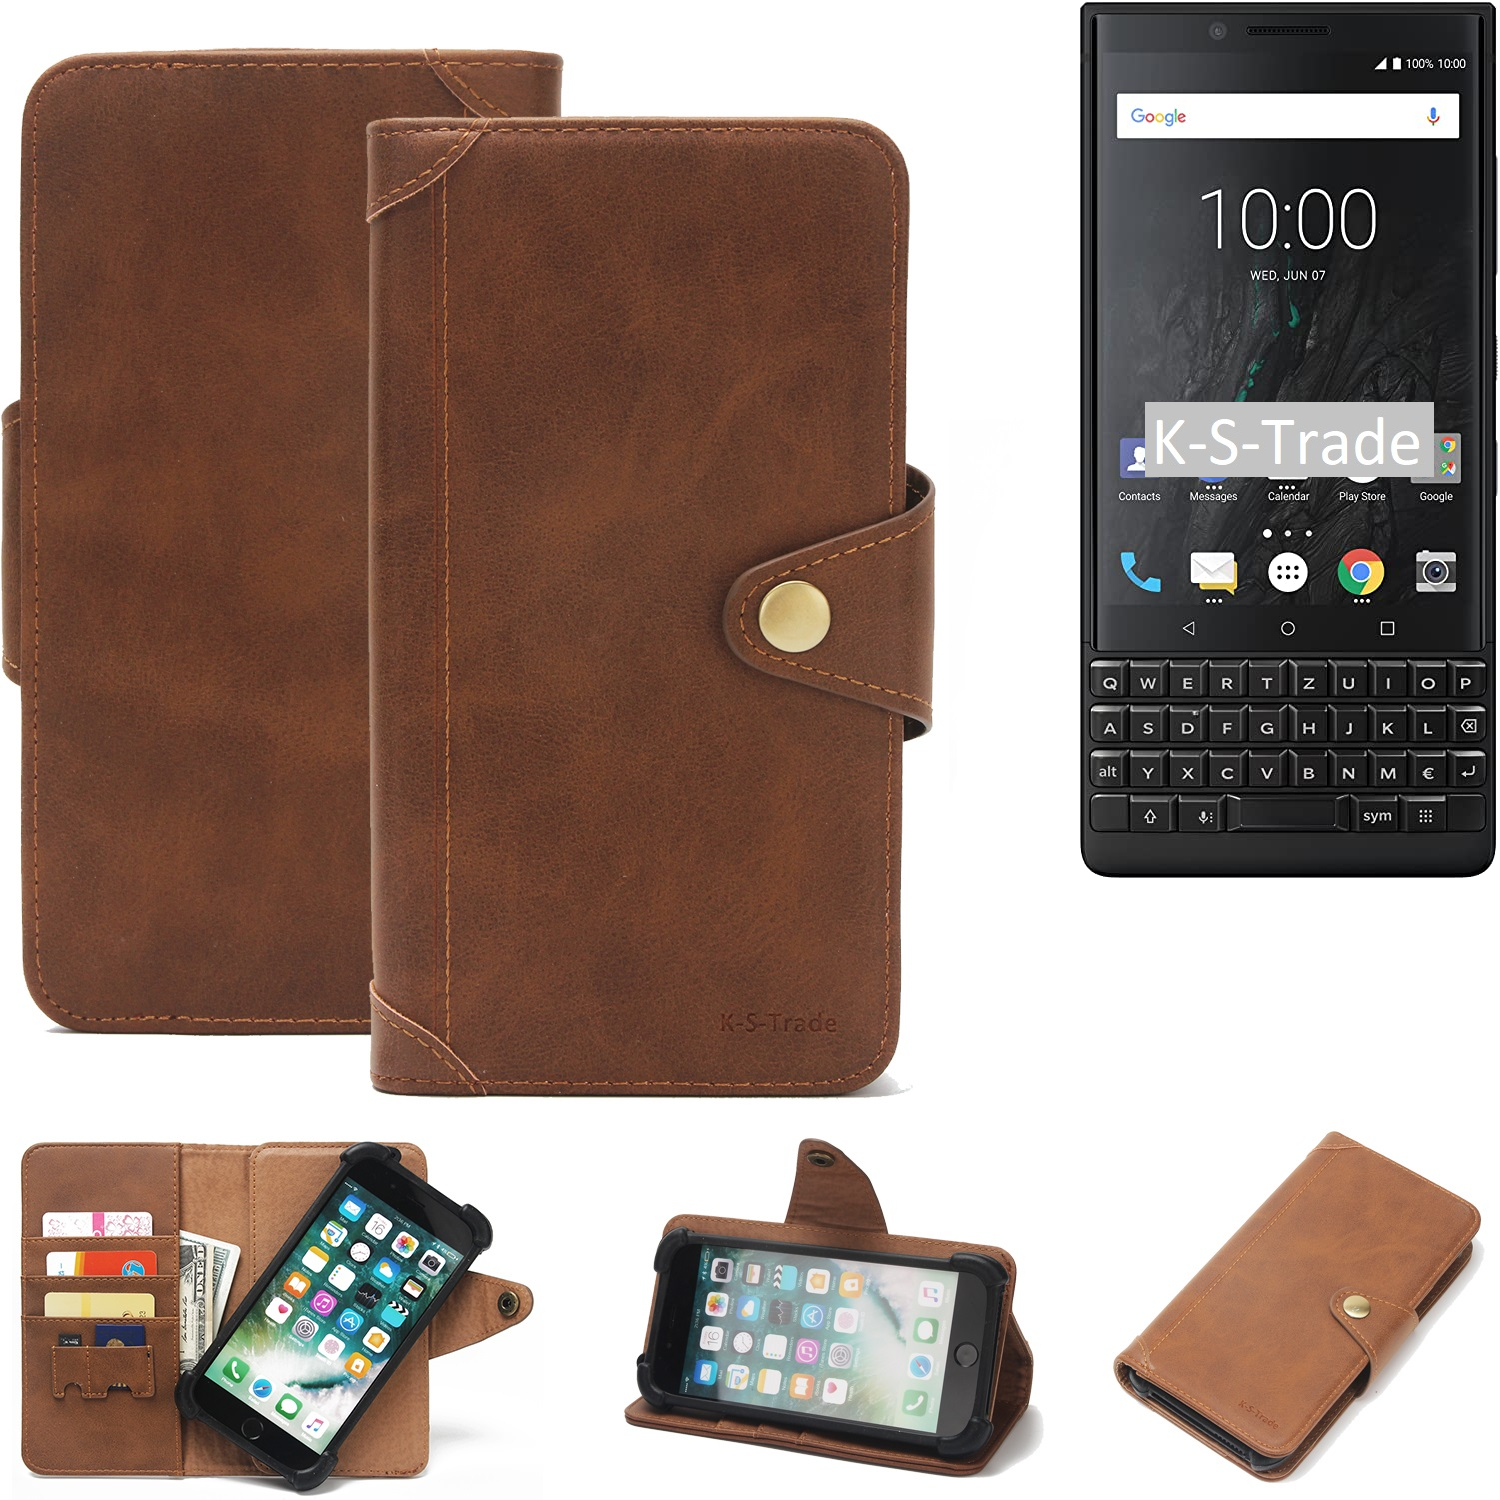 braun K-S-TRADE (Dual-SIM), Bookcover, KEY2 Schutzhülle, Blackberry,